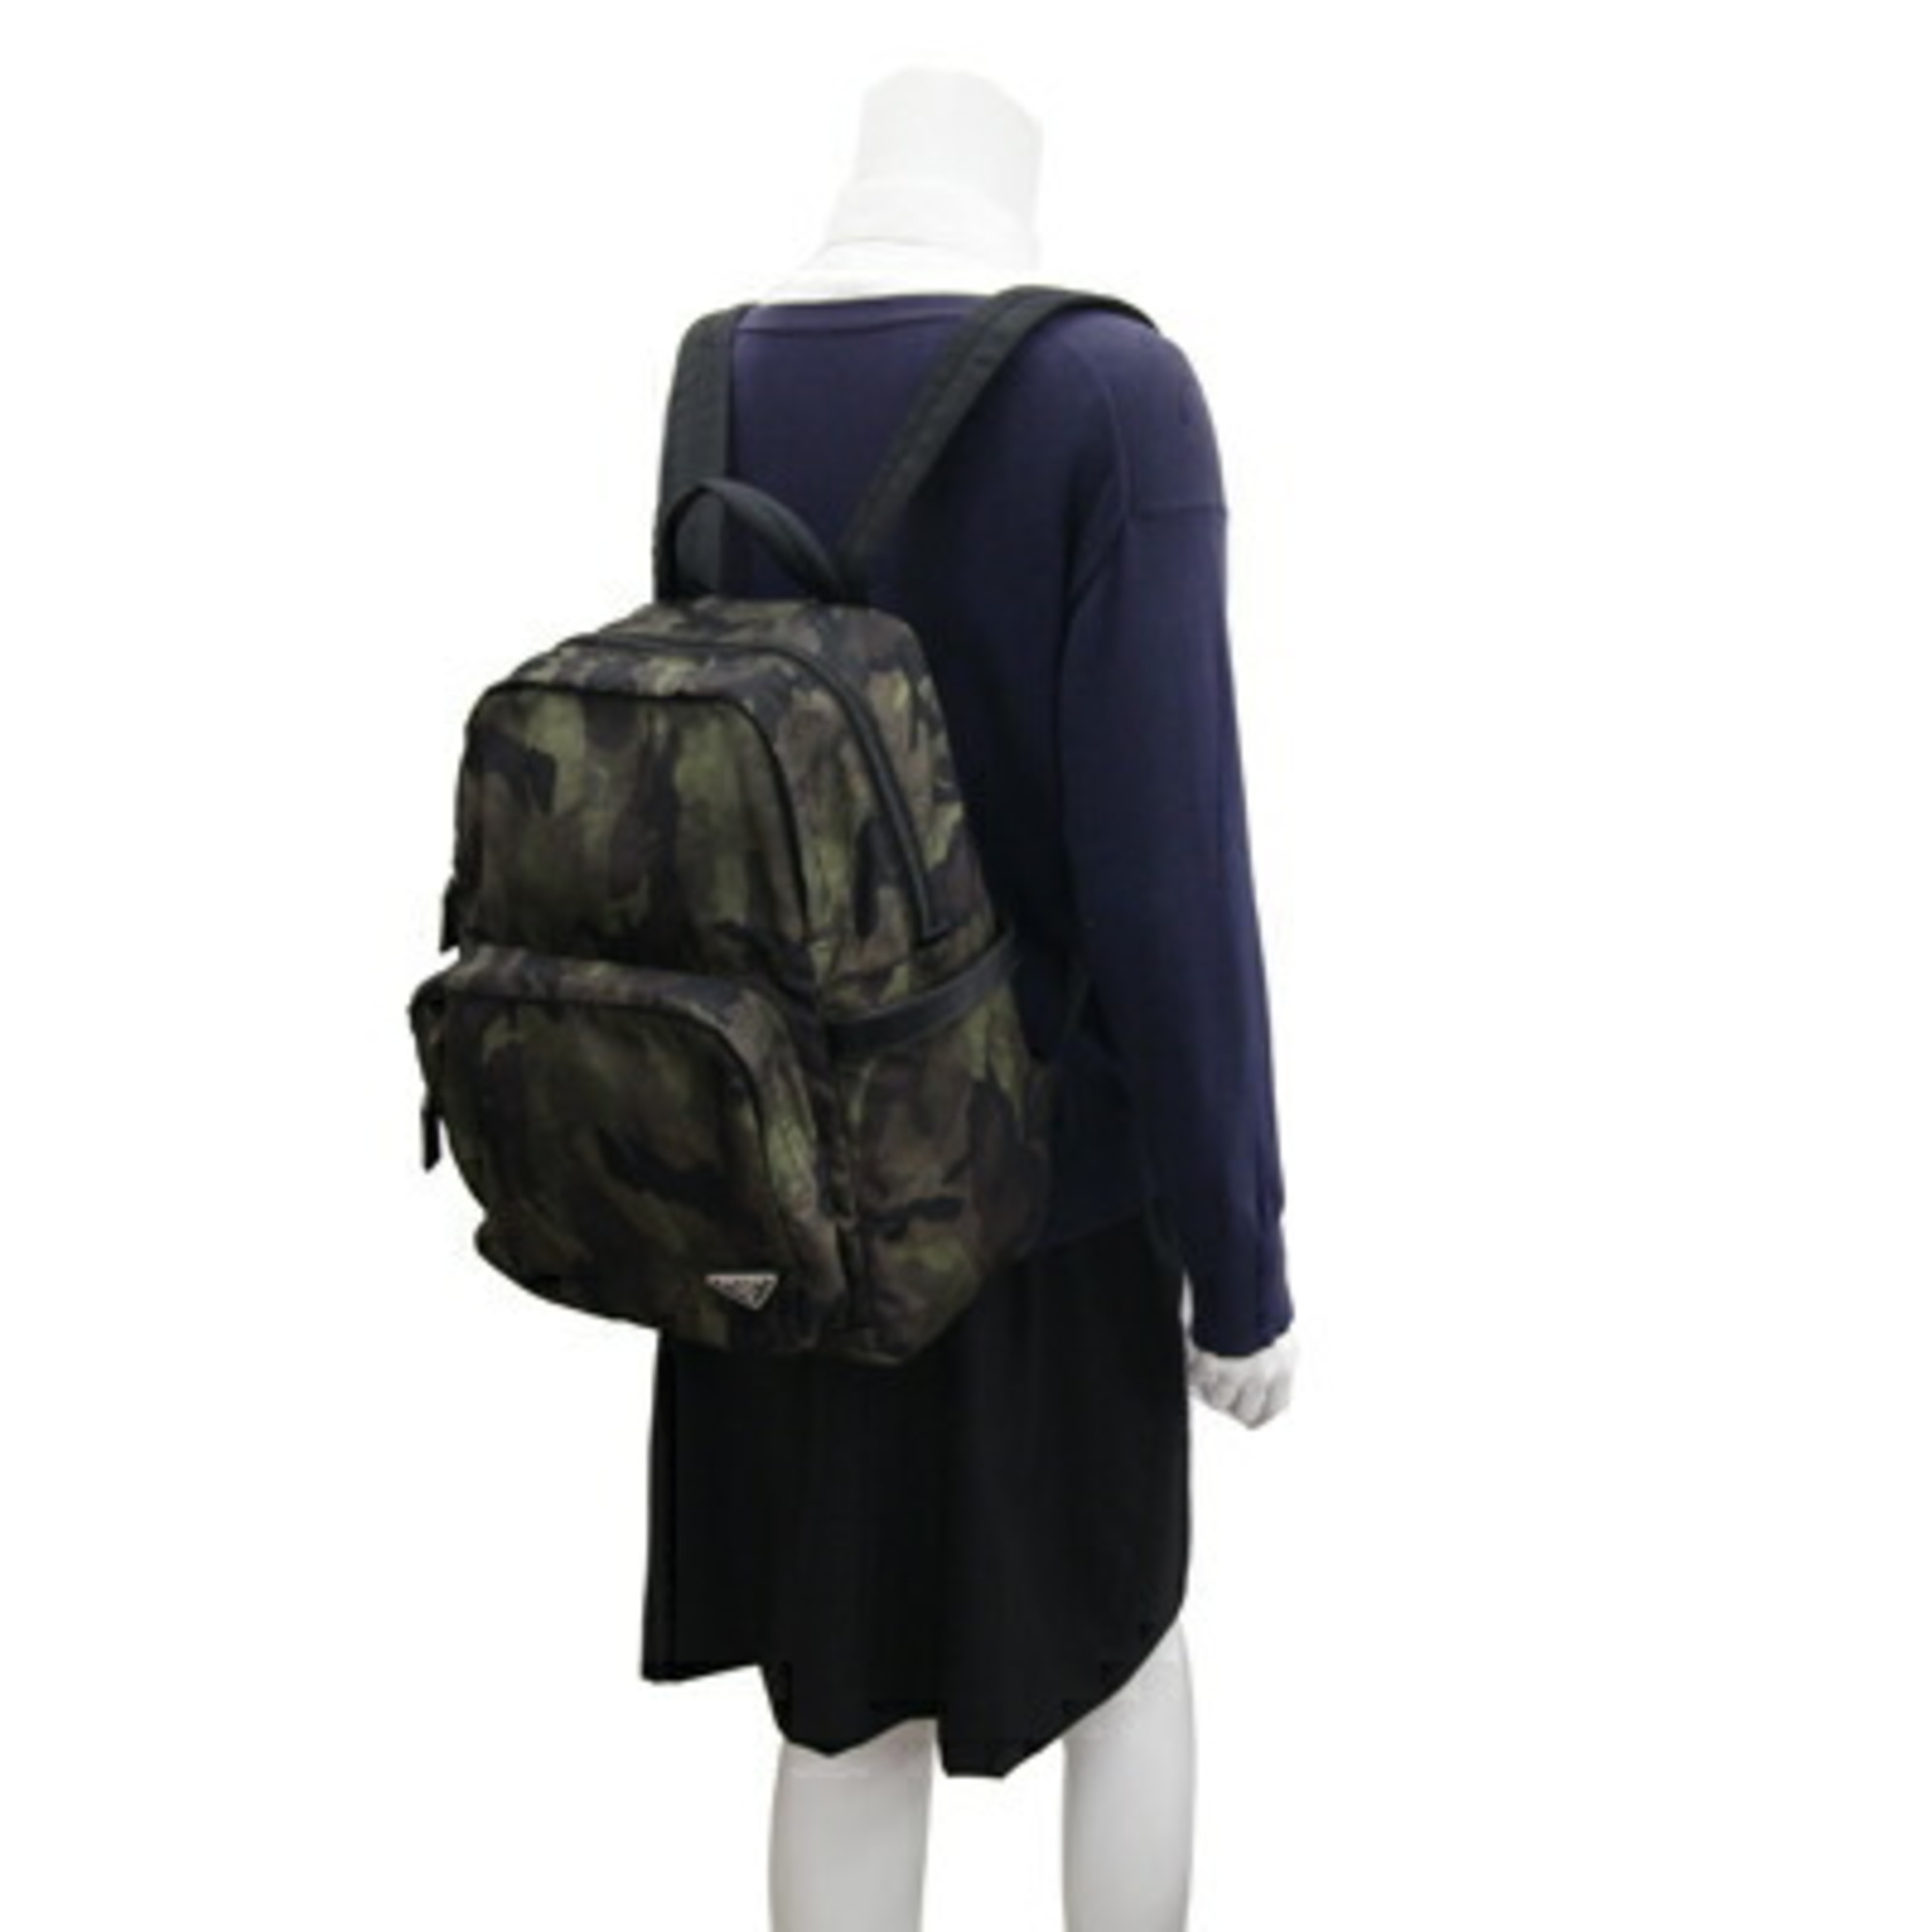 Prada Backpack VZ0051 Khaki Brown Black Nylon Camouflage Men Women PRADA